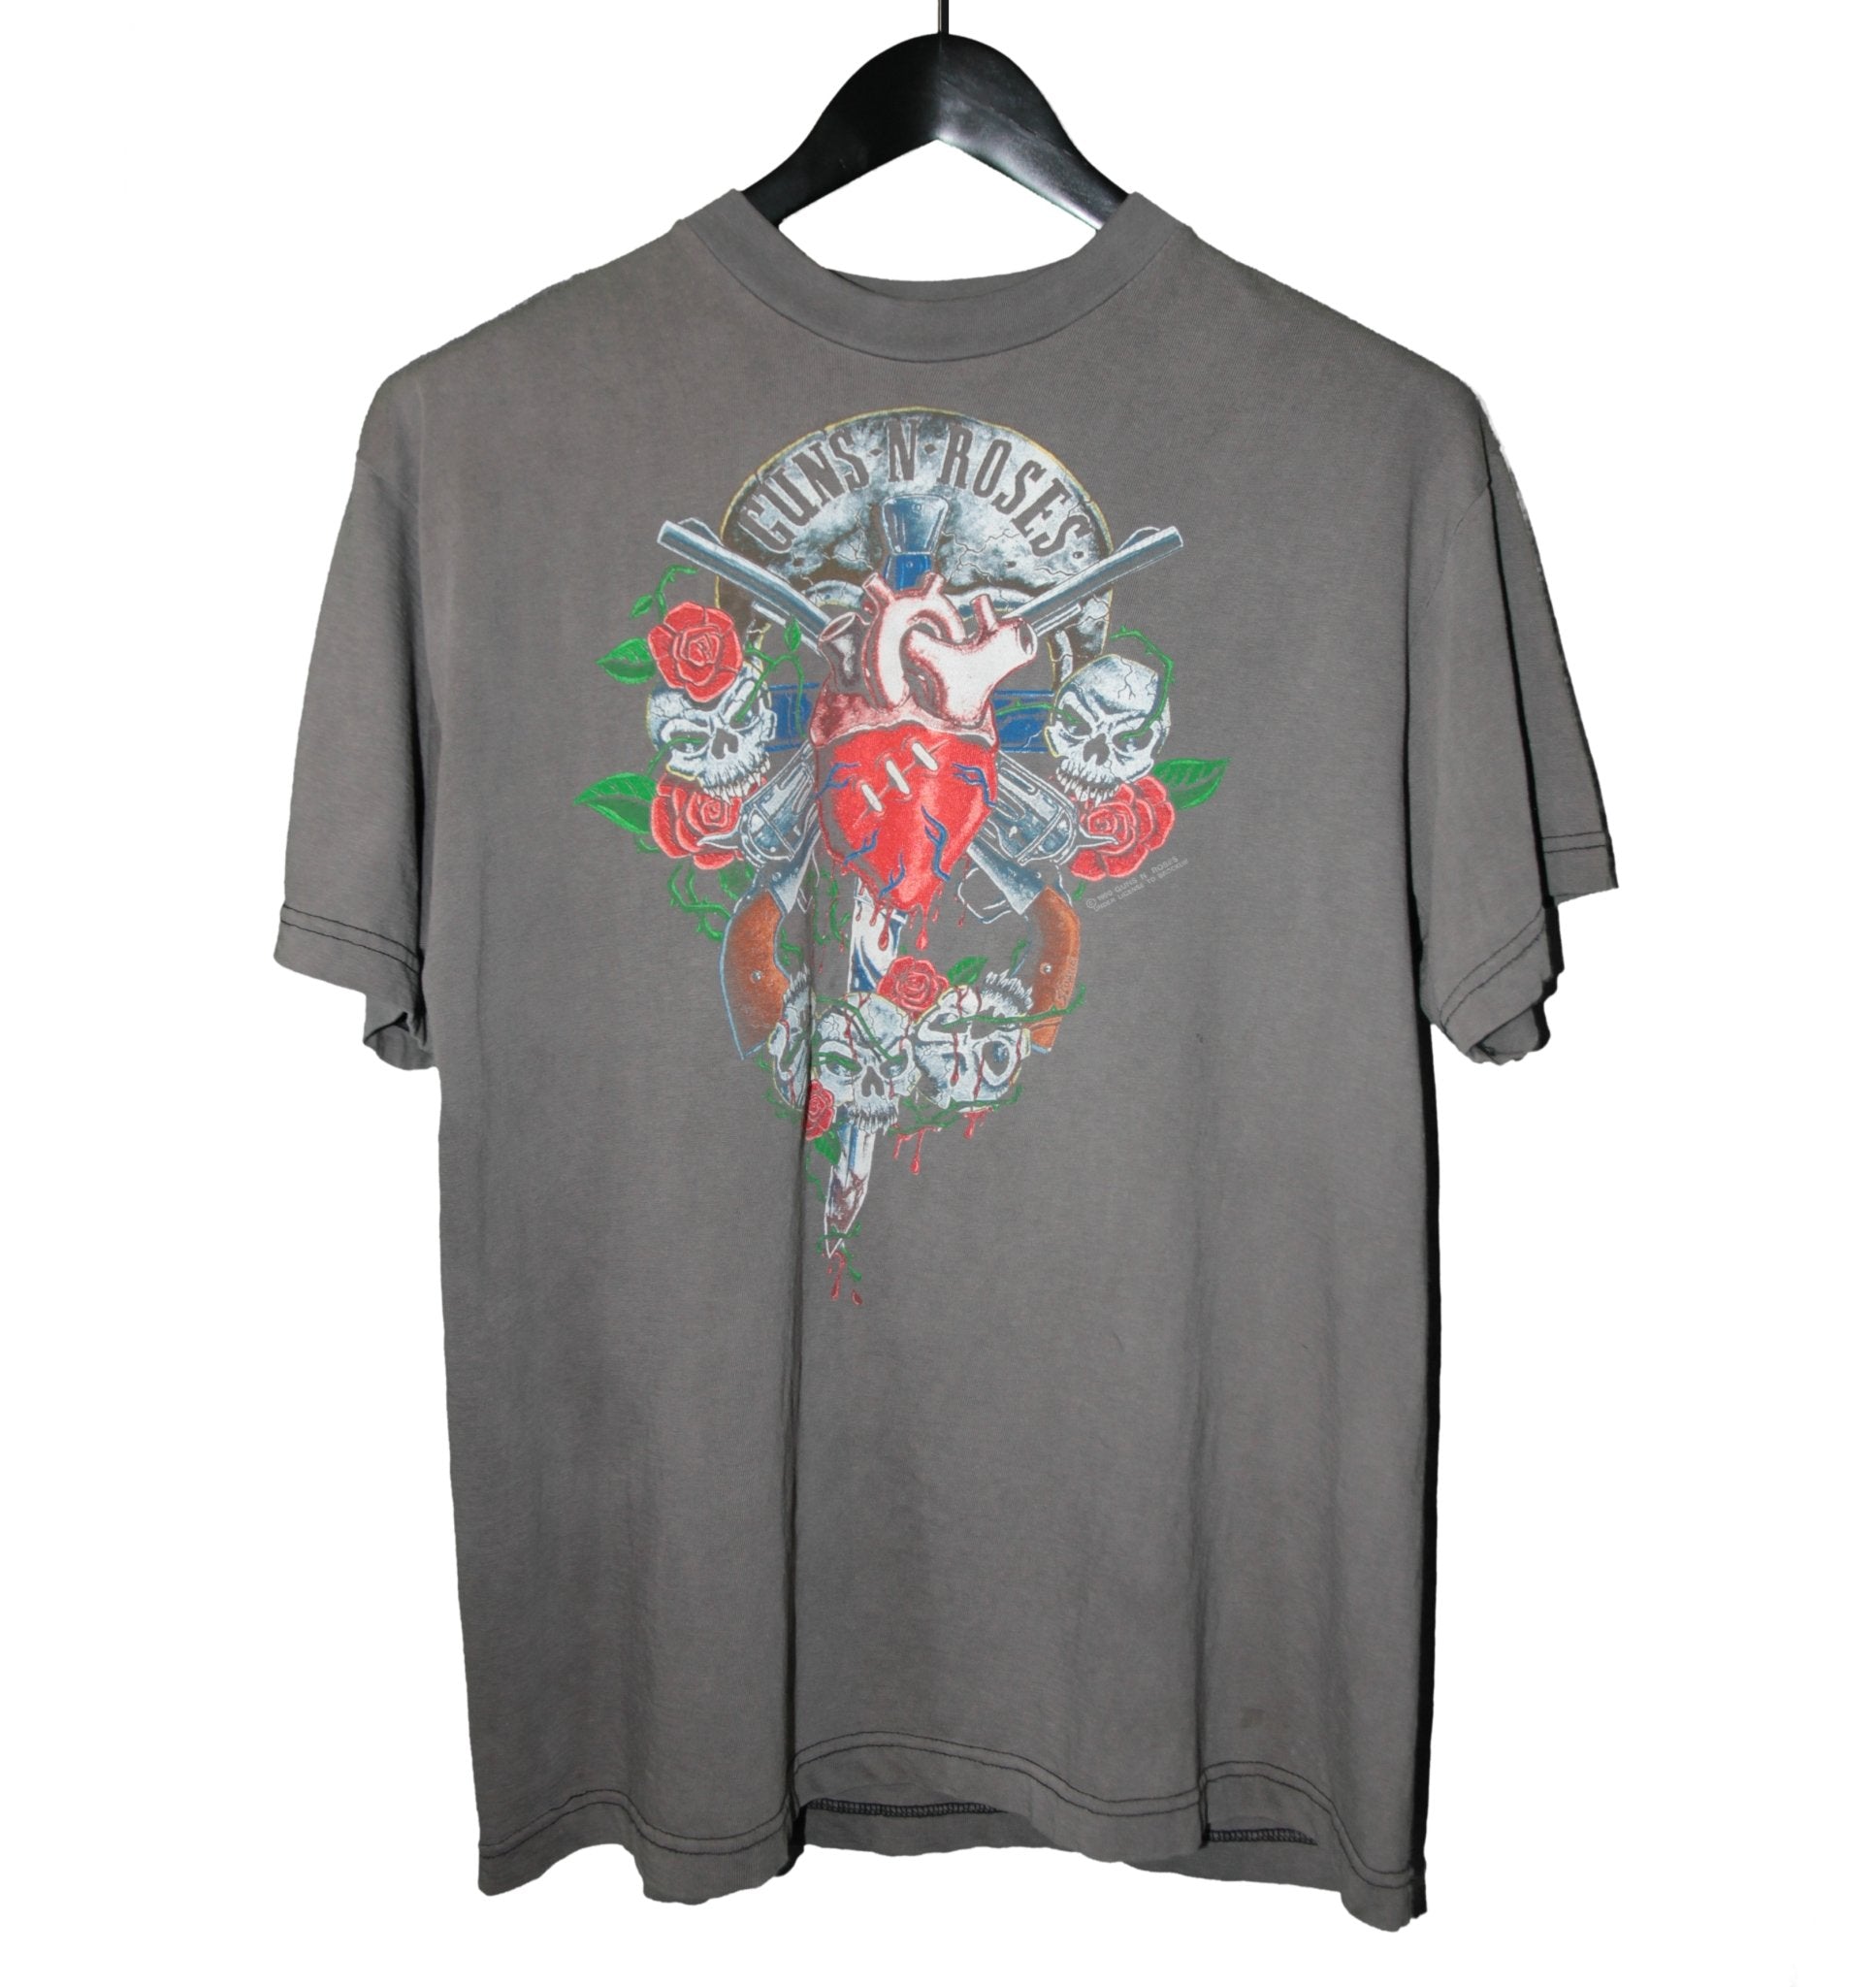 Guns N Roses 1990 Skull & Dagger Shirt - Faded AU